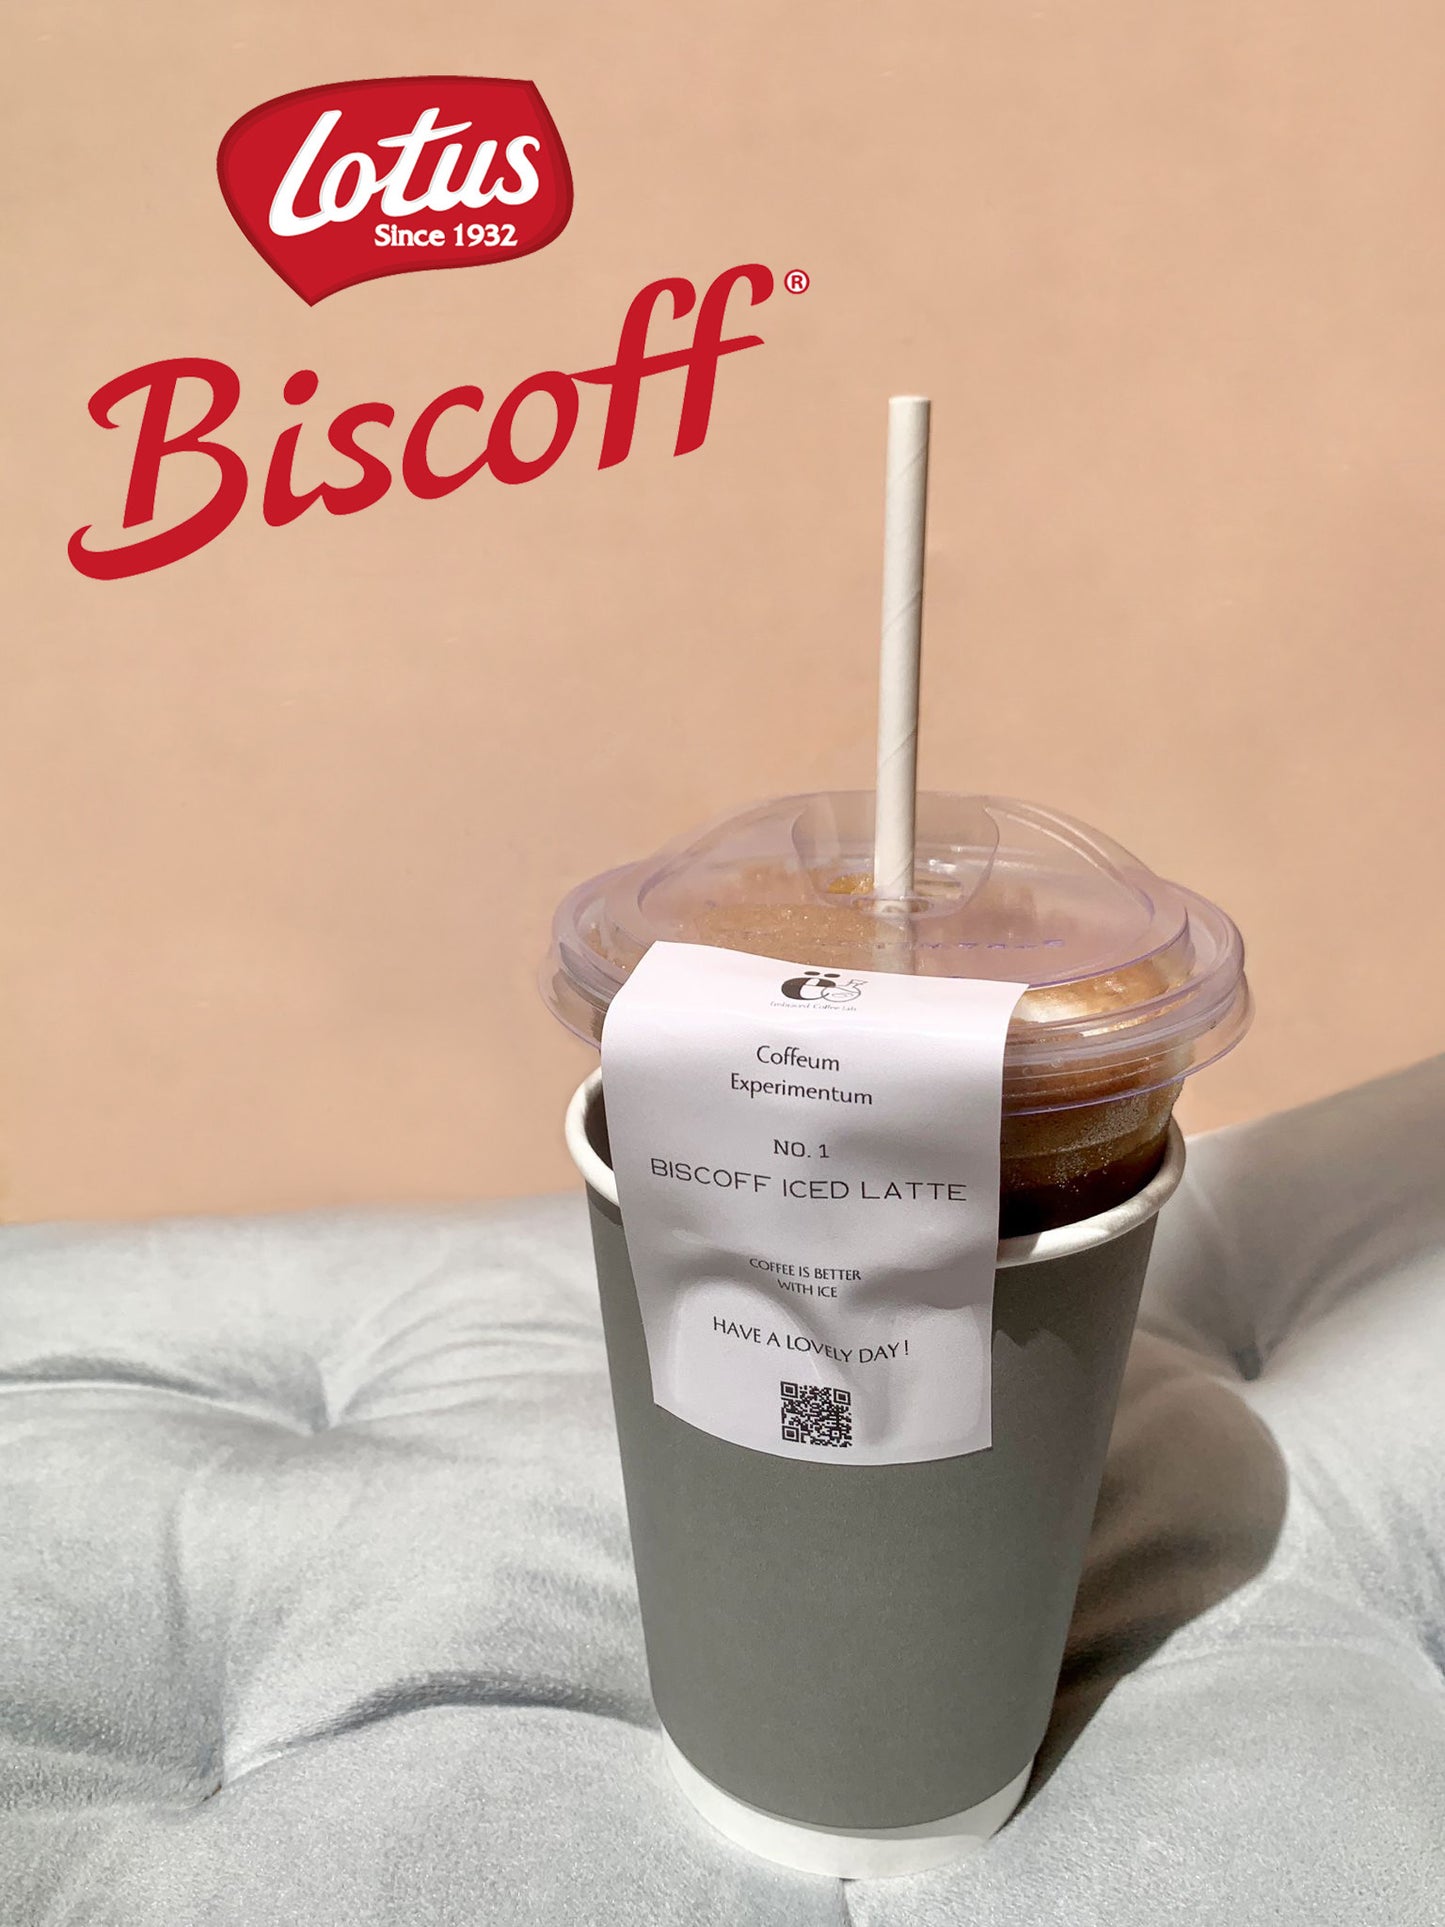 Biscoff Iced Latte